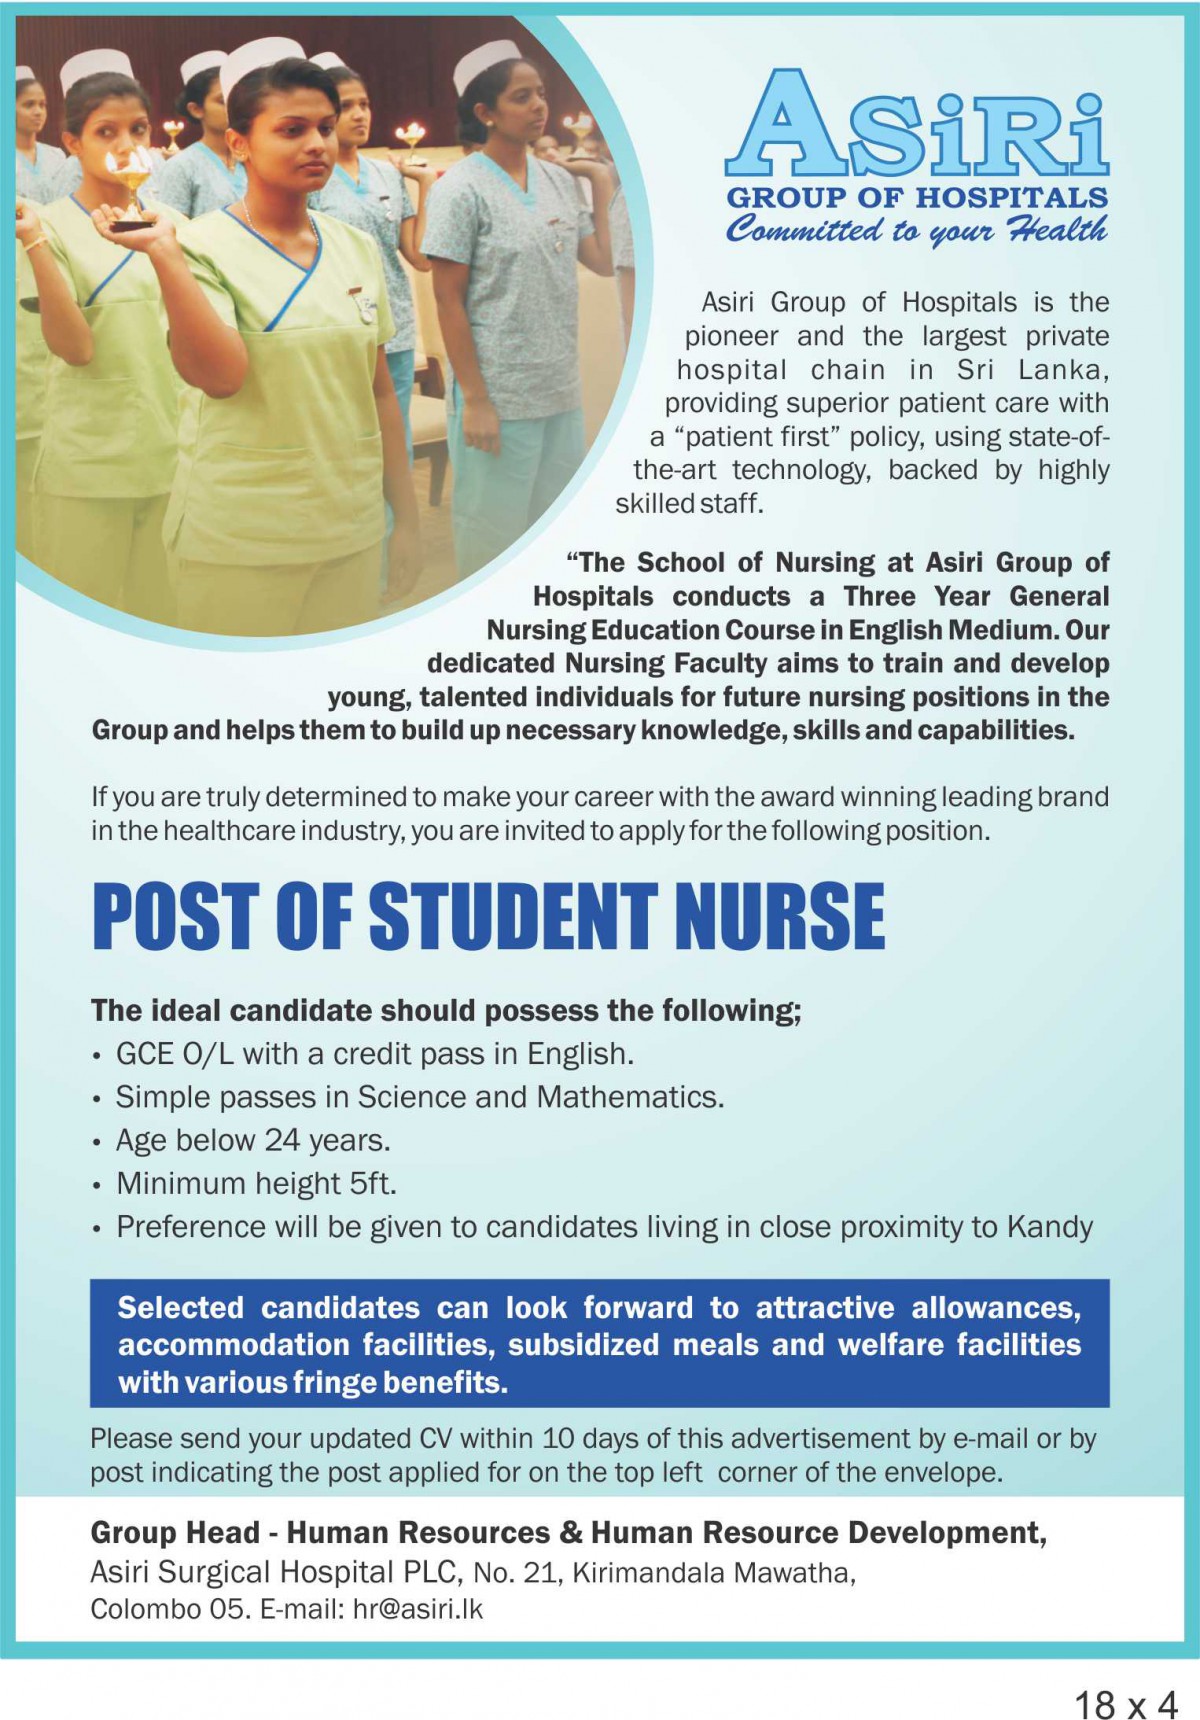 Student Nurse Jobs Vacancies - Asiri Hospital Sri Lanka Jobs Vacancy Details